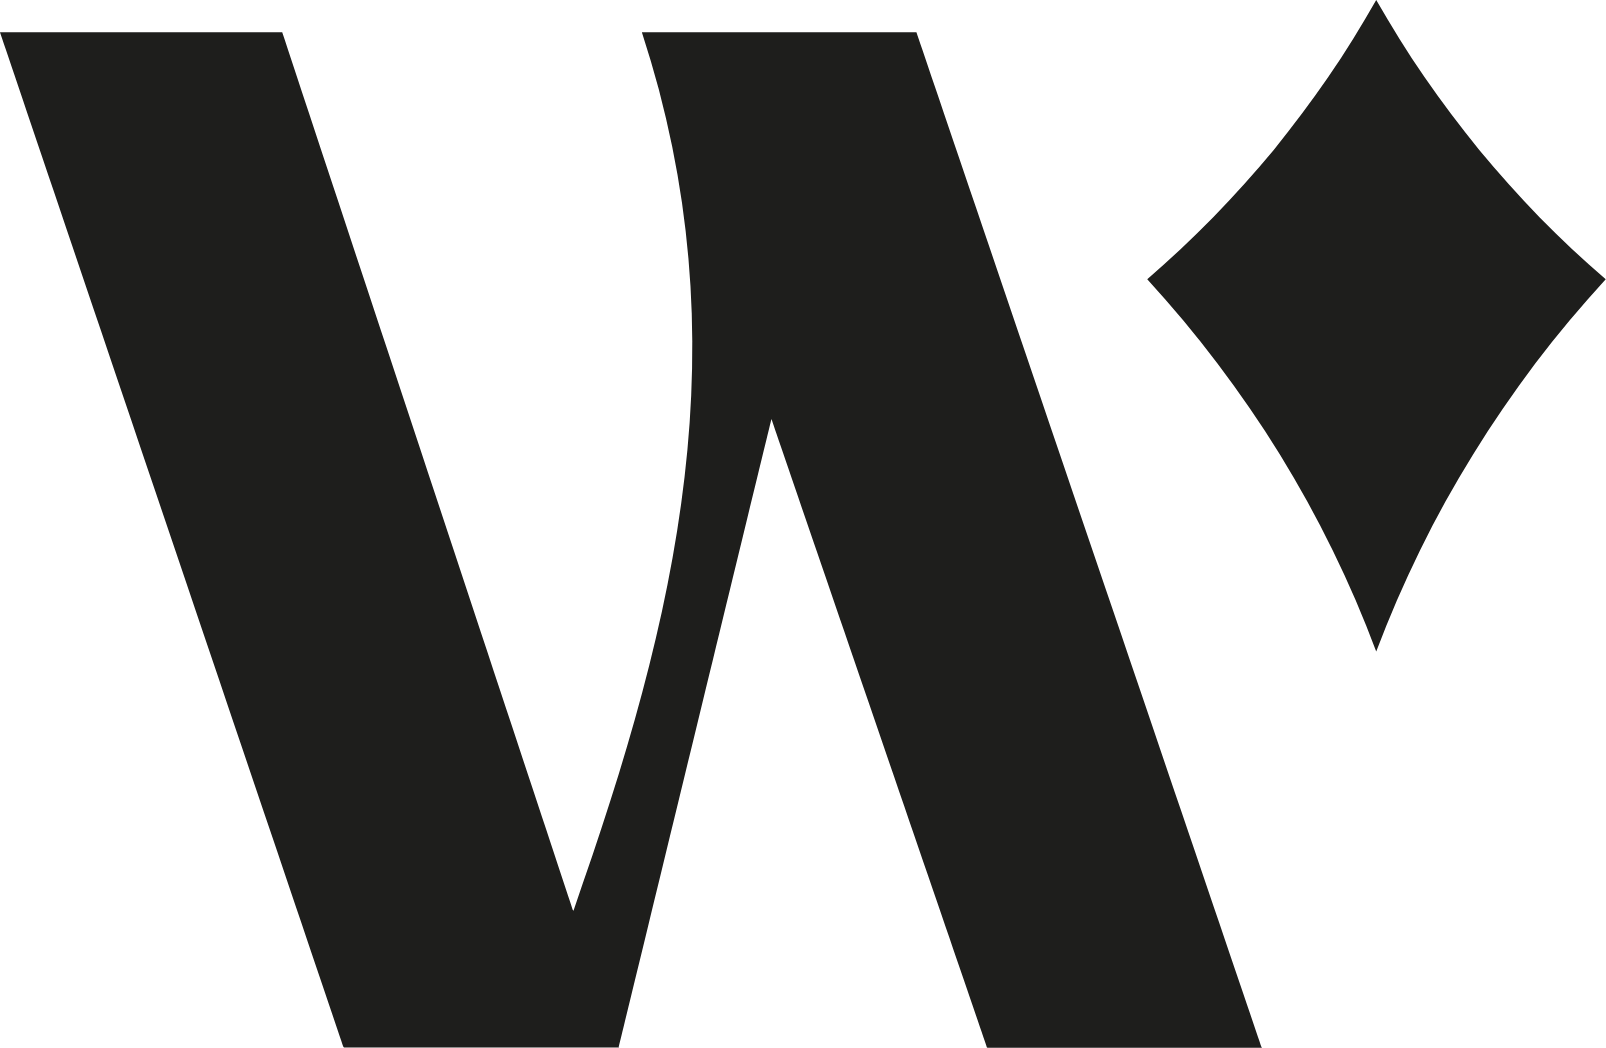 ContextLogic (wish.com) logo (PNG transparent)